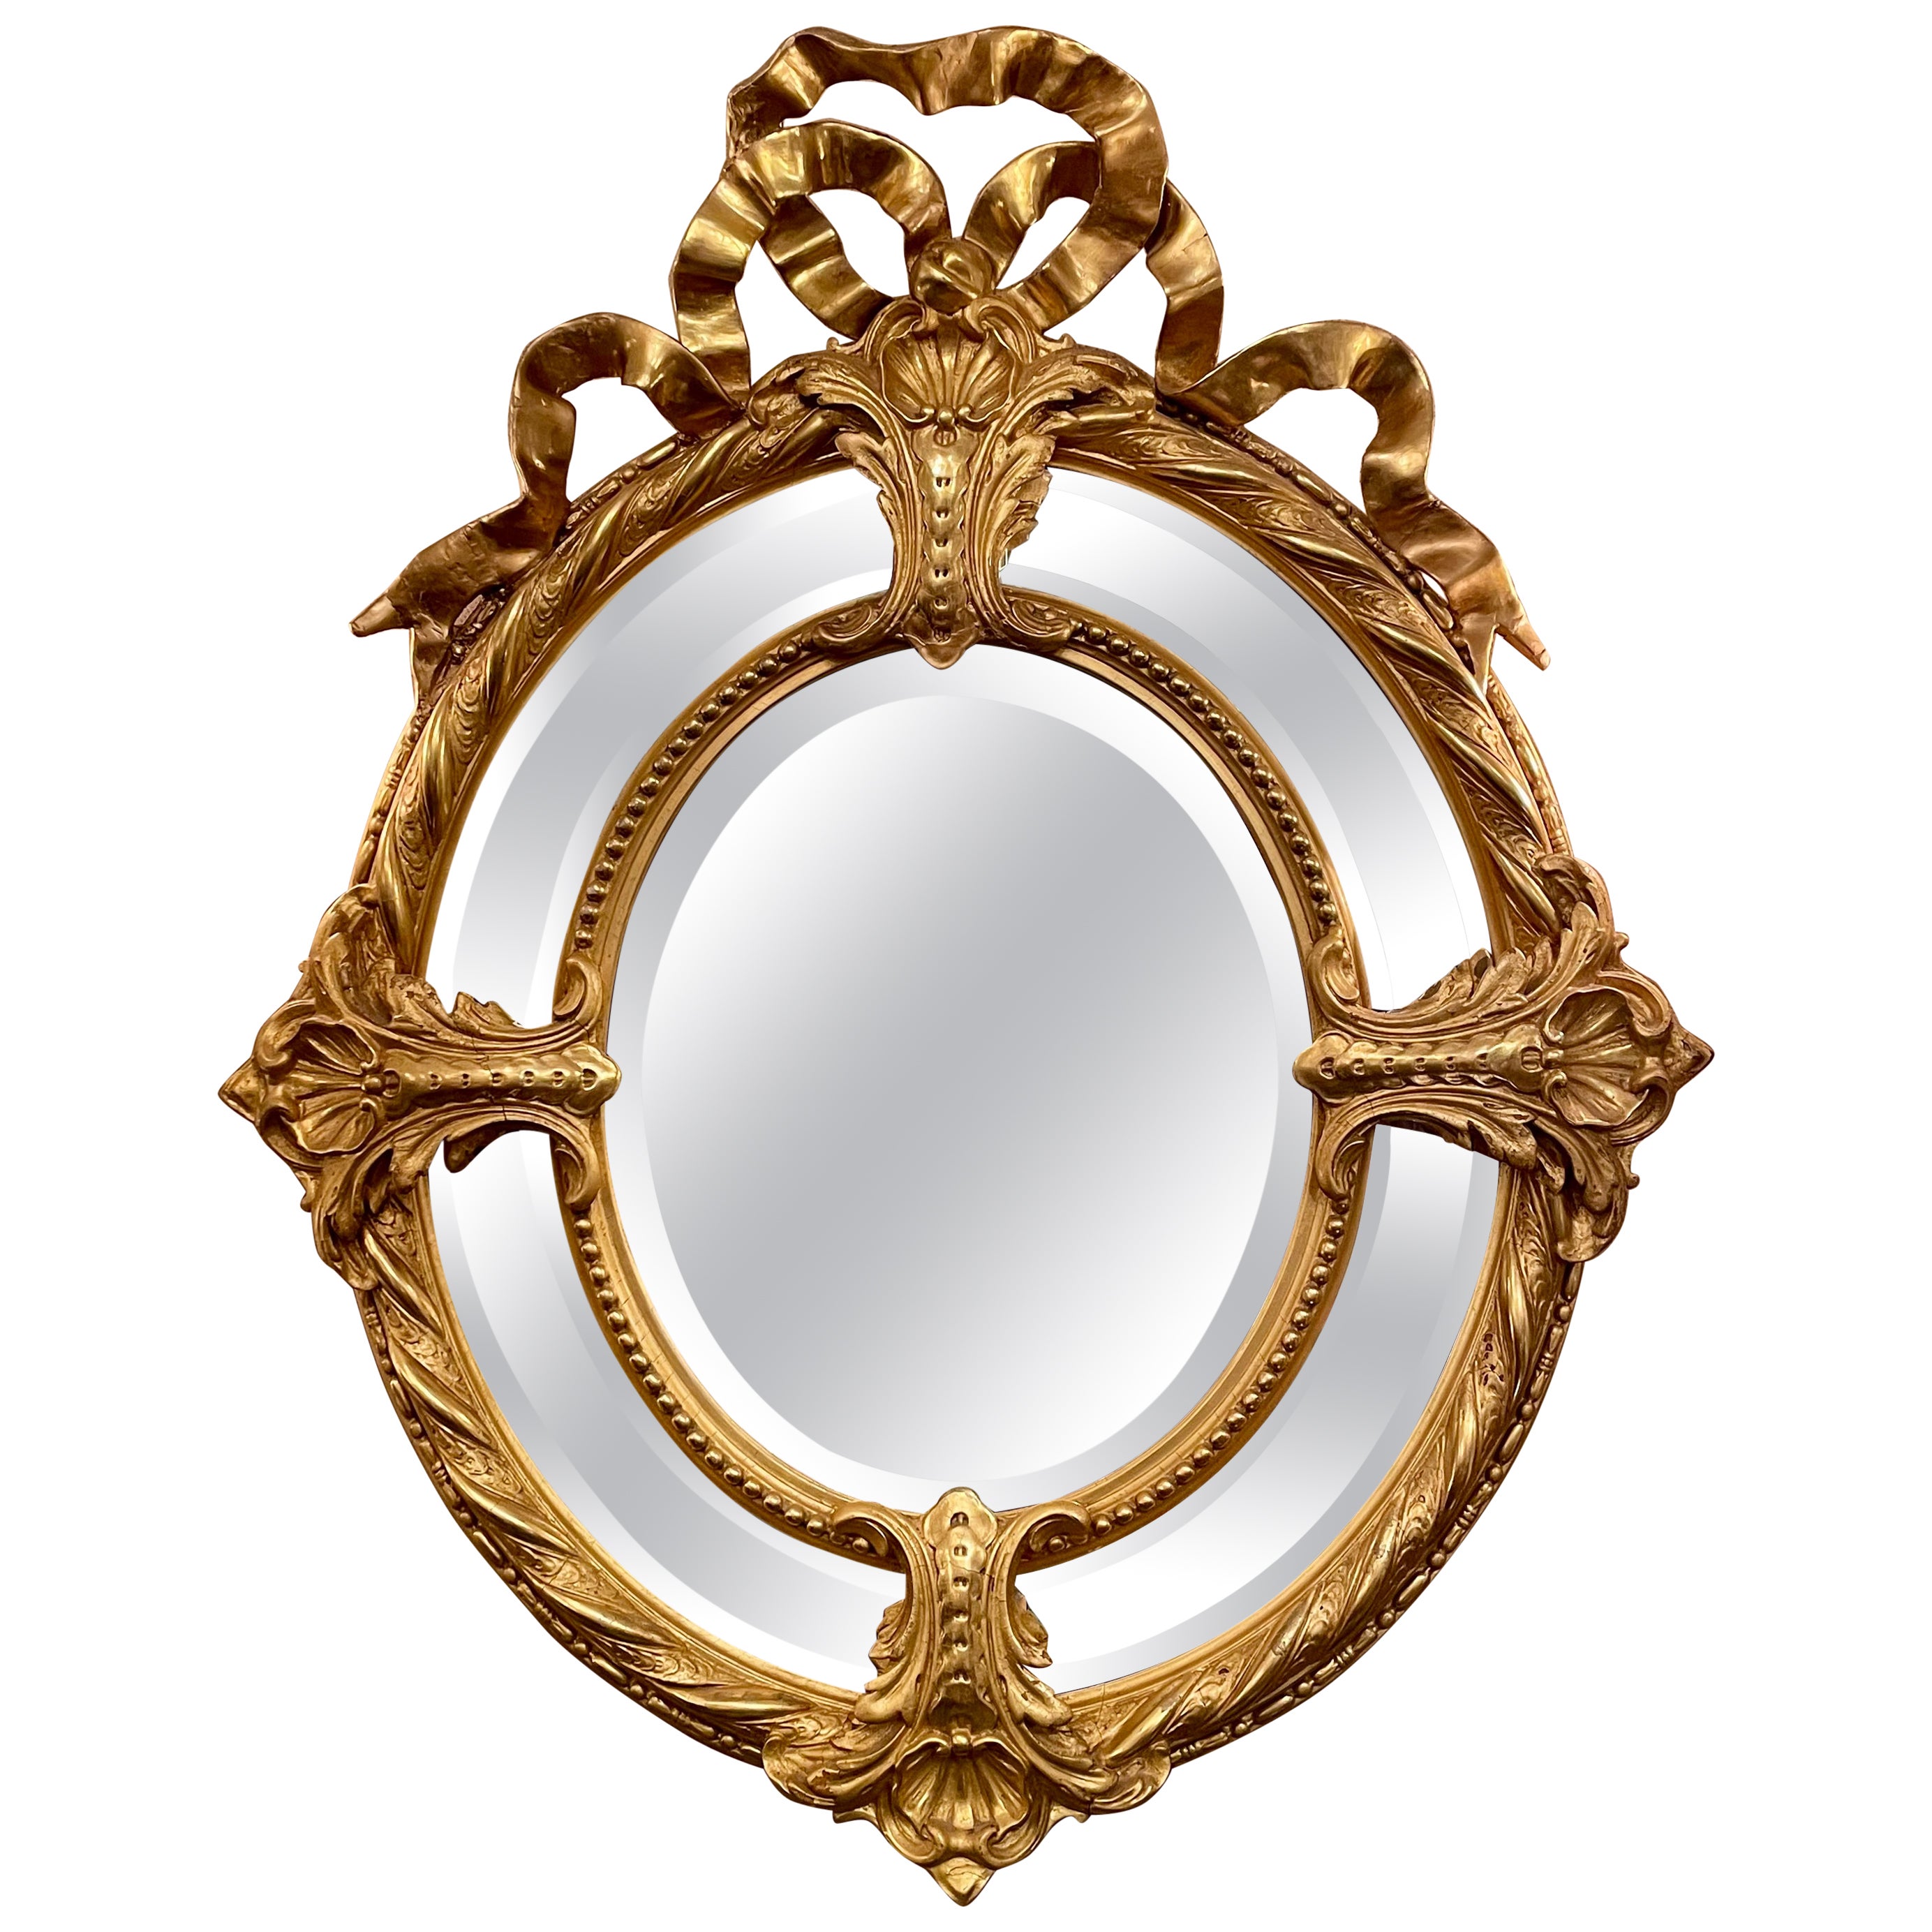 Antique French Louis XVI Beveled Mirror circa 1880